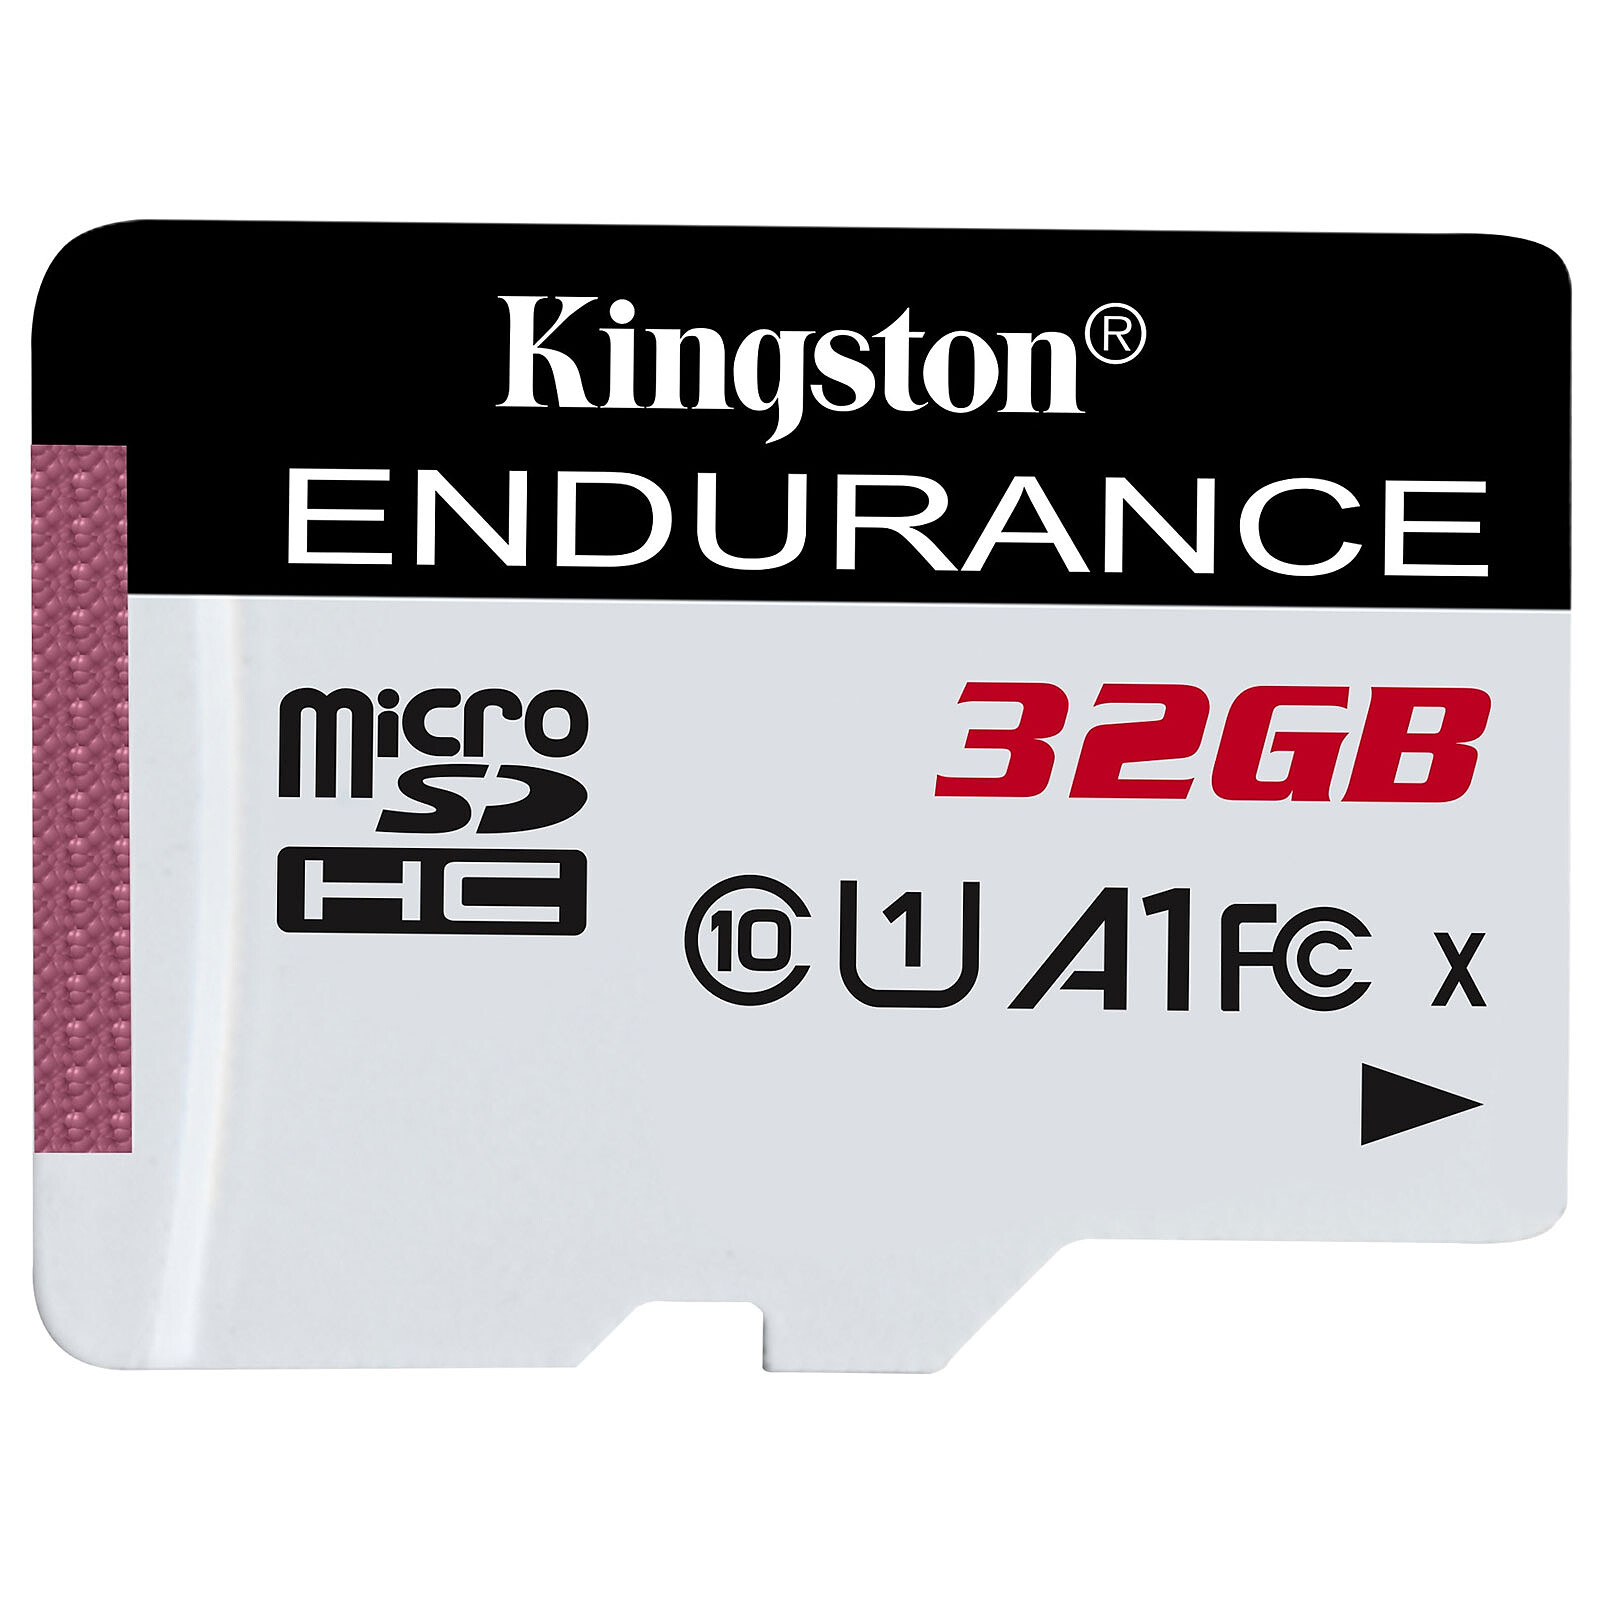 Kingston Industrial 32 Go MicroSDHC UHS-I Classe 10, Carte mémoire